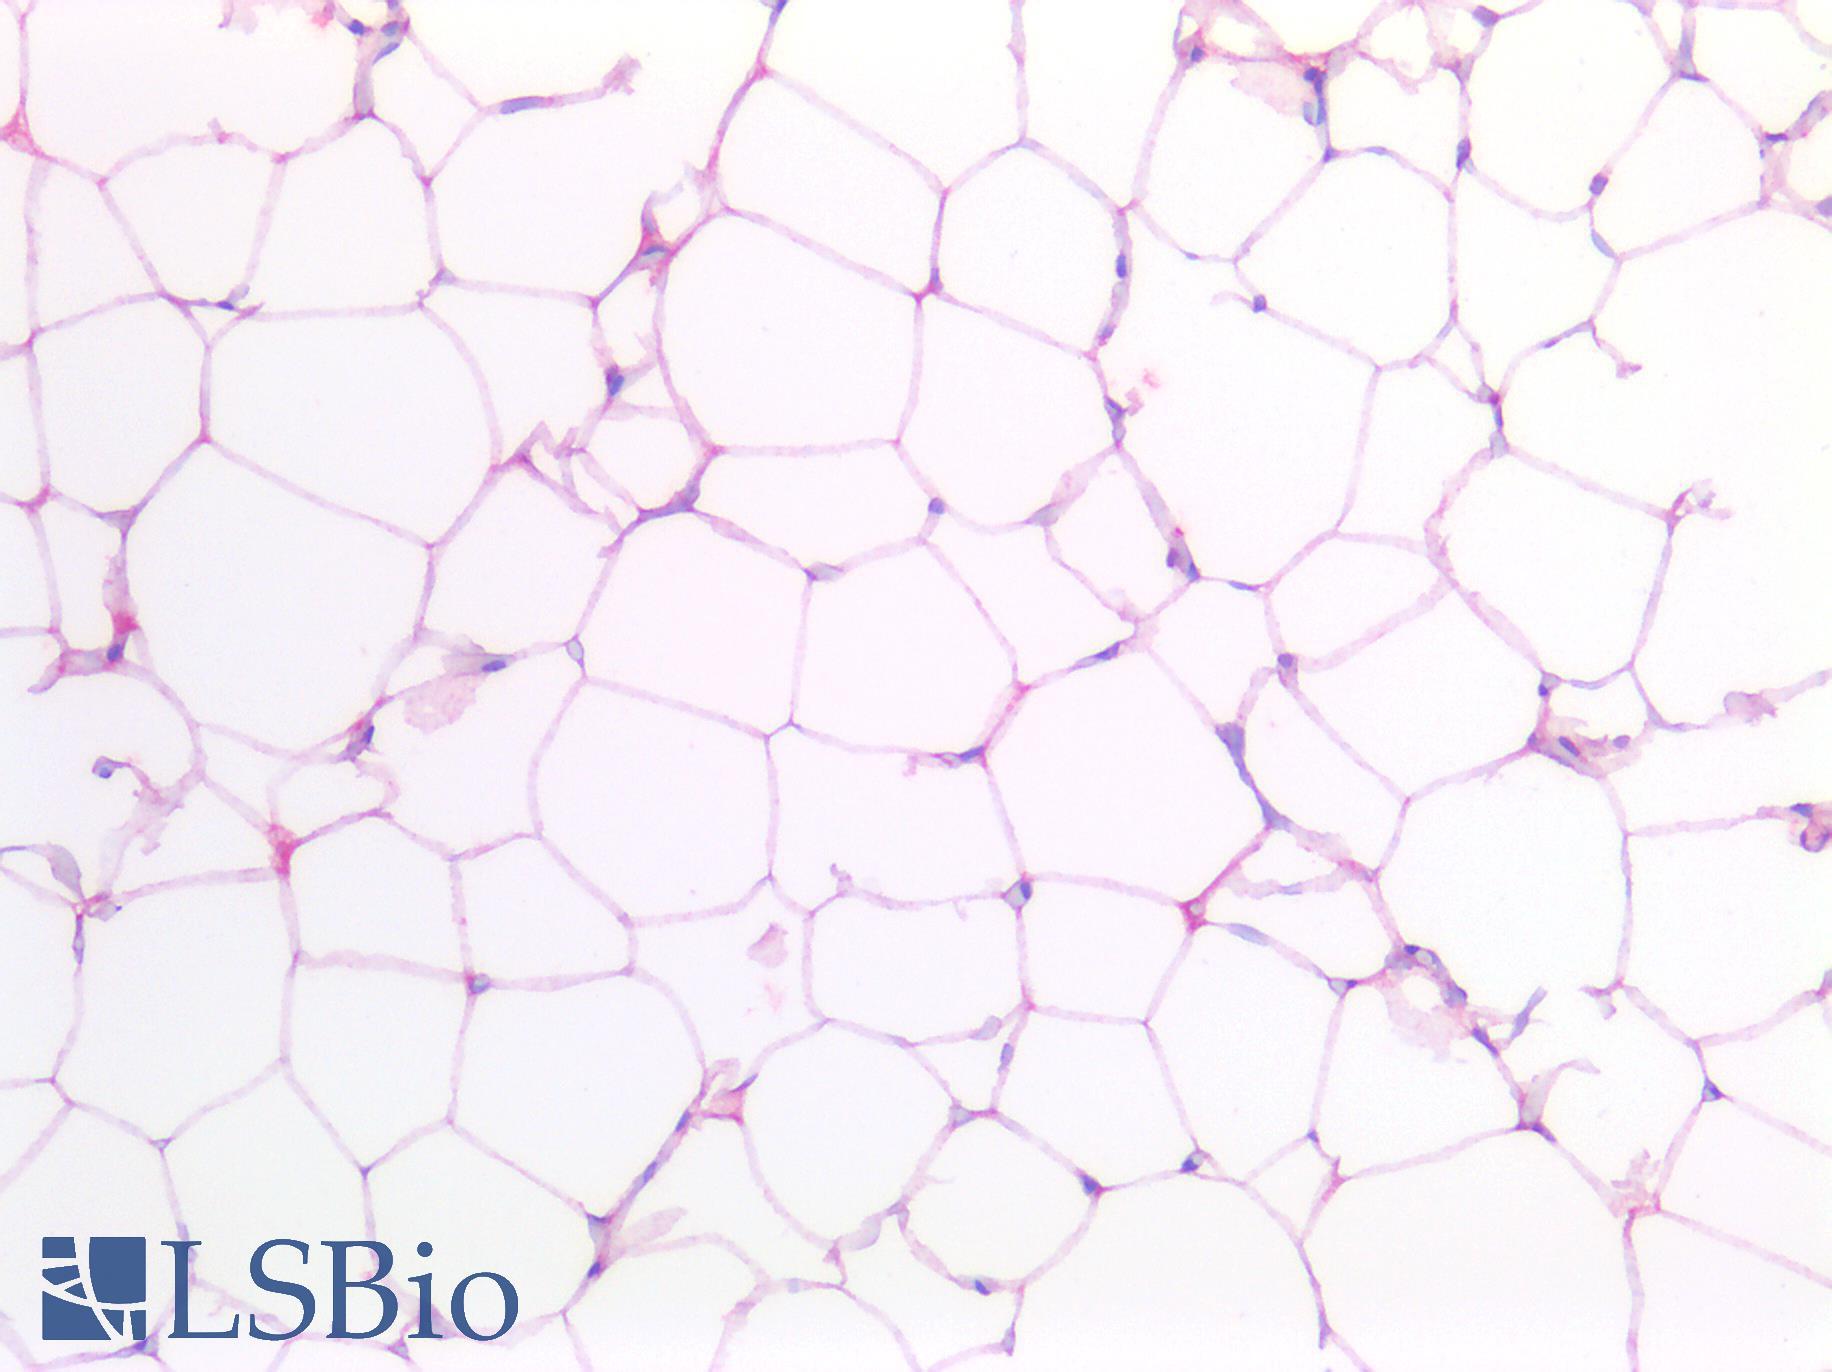 GLUL / Glutamine Synthetase Antibody - Human Breast Adipocytes: Formalin-Fixed, Paraffin-Embedded (FFPE)